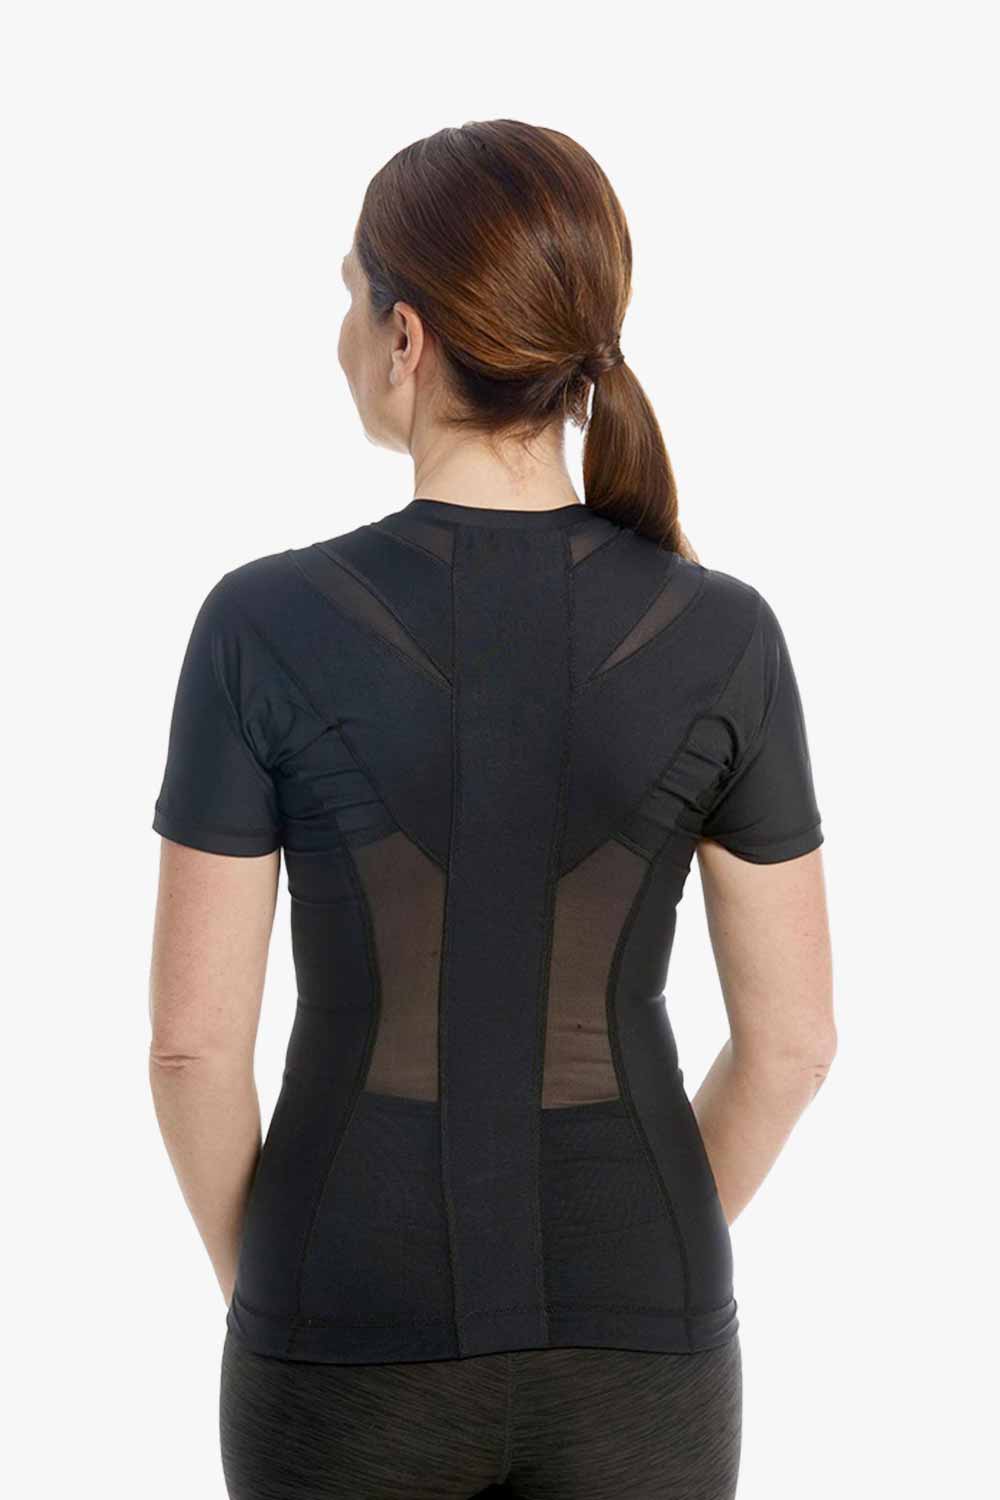 'Women''s Posture Shirt™ - Schwarz'